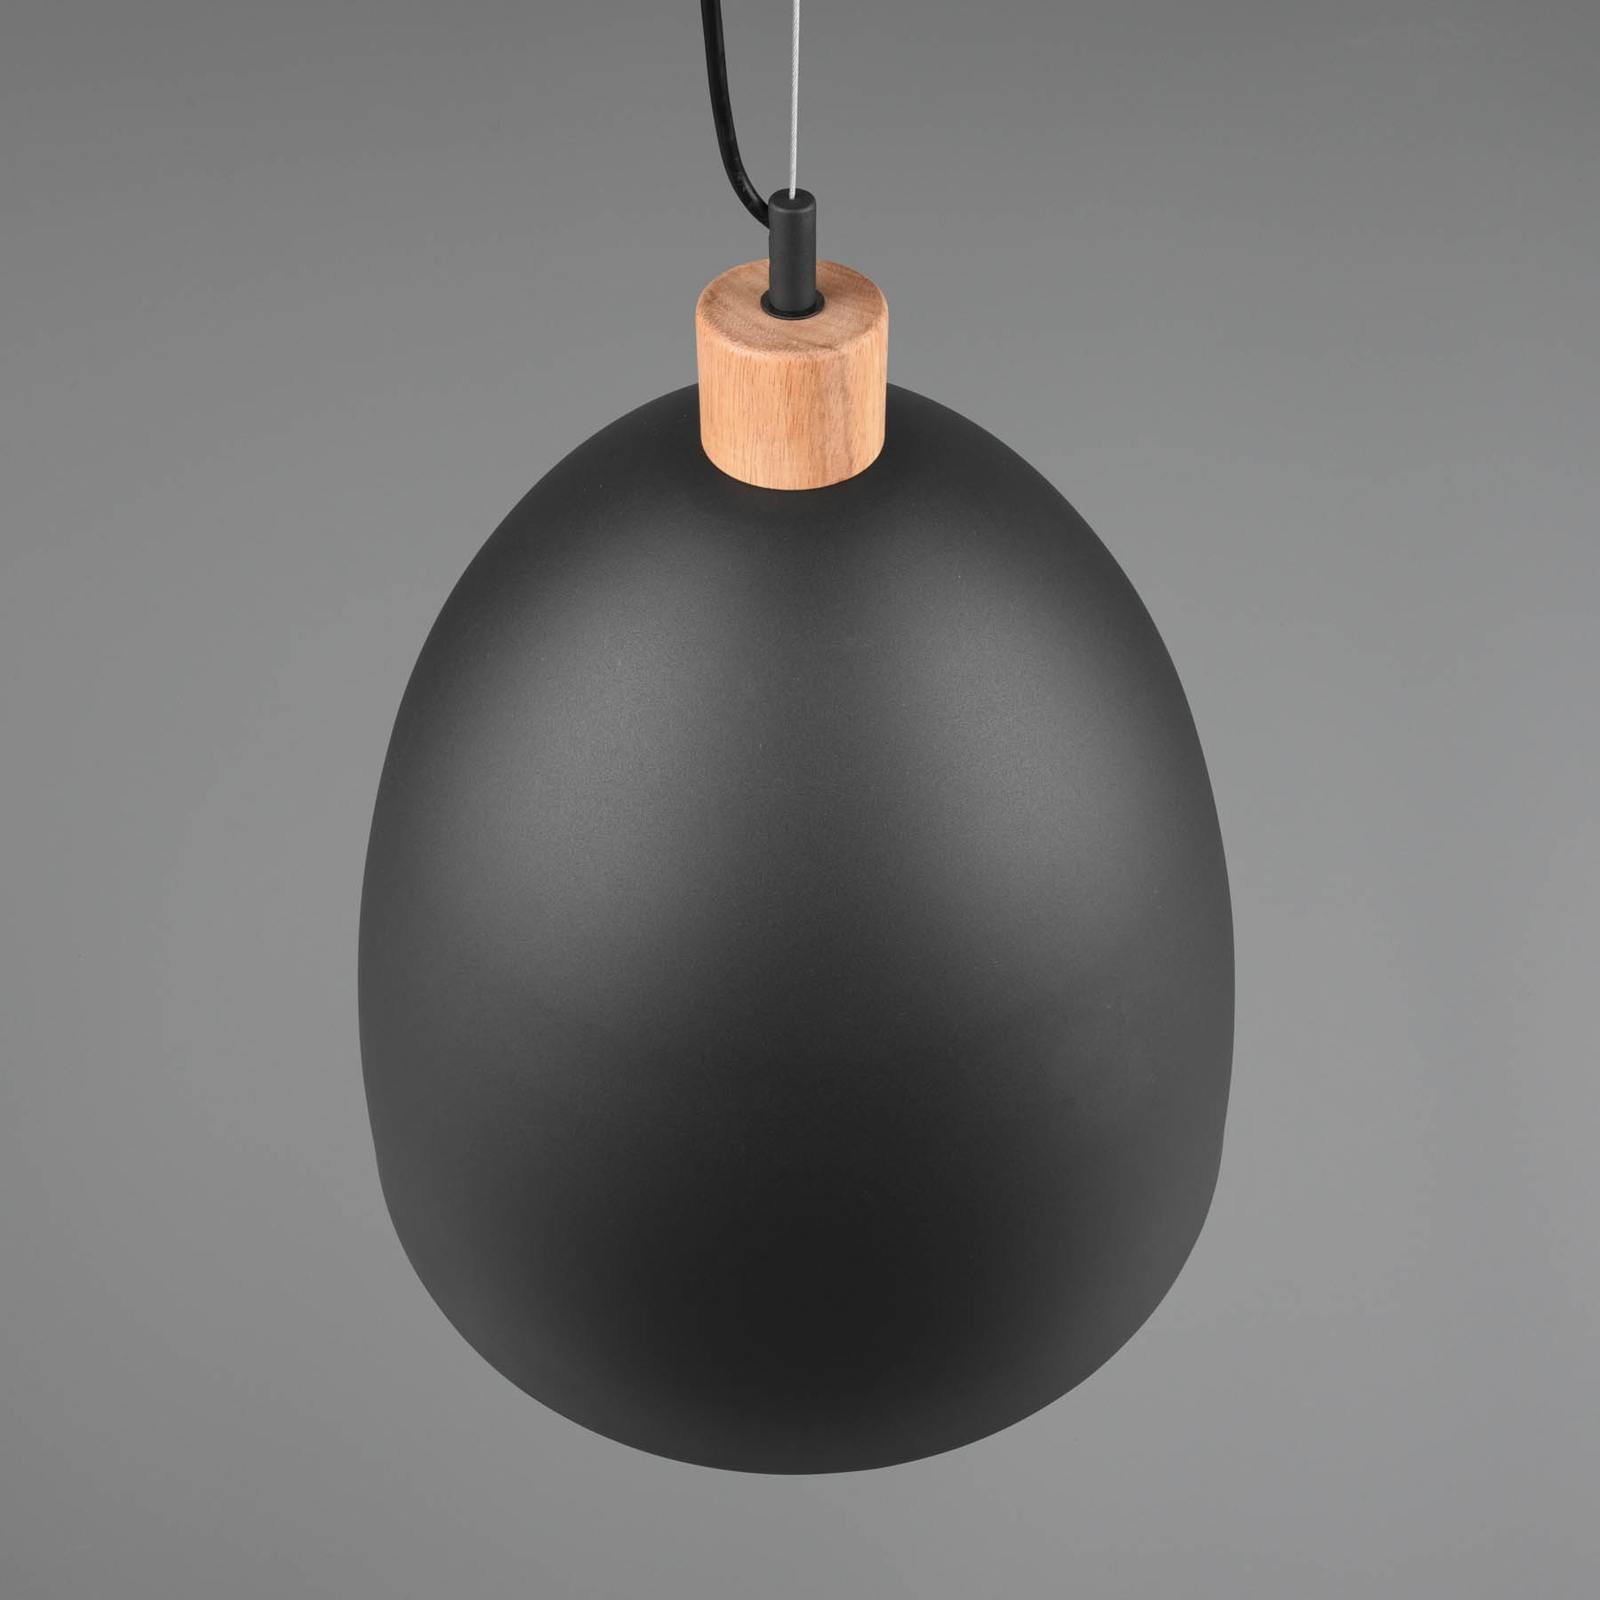 Jagger pendant light, one-bulb, Ø 40 cm, black